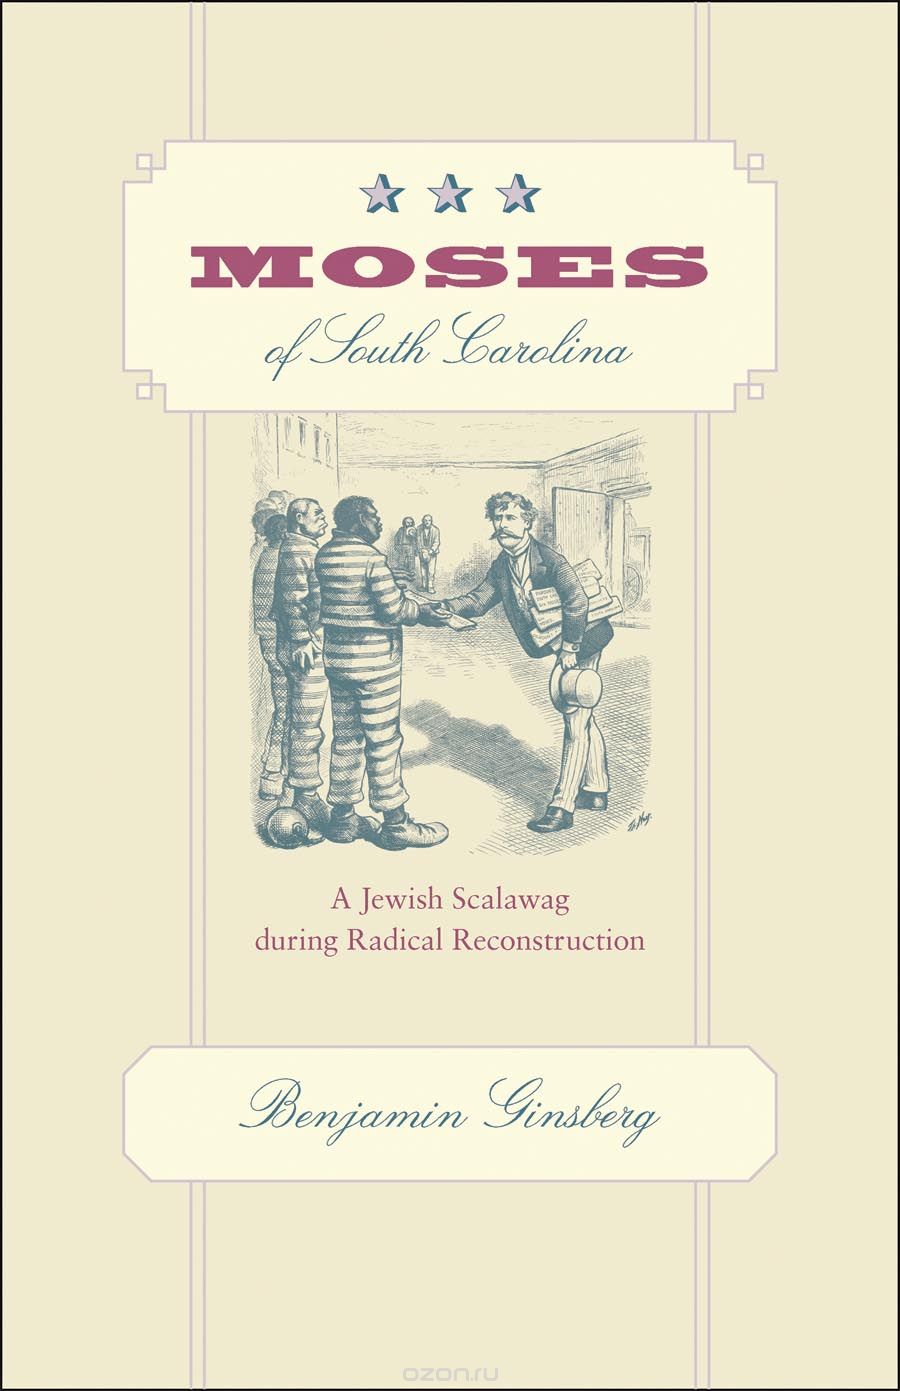 Скачать книгу "Moses of South Carolina – A Jewish Scalawag during Radical Reconstruction"